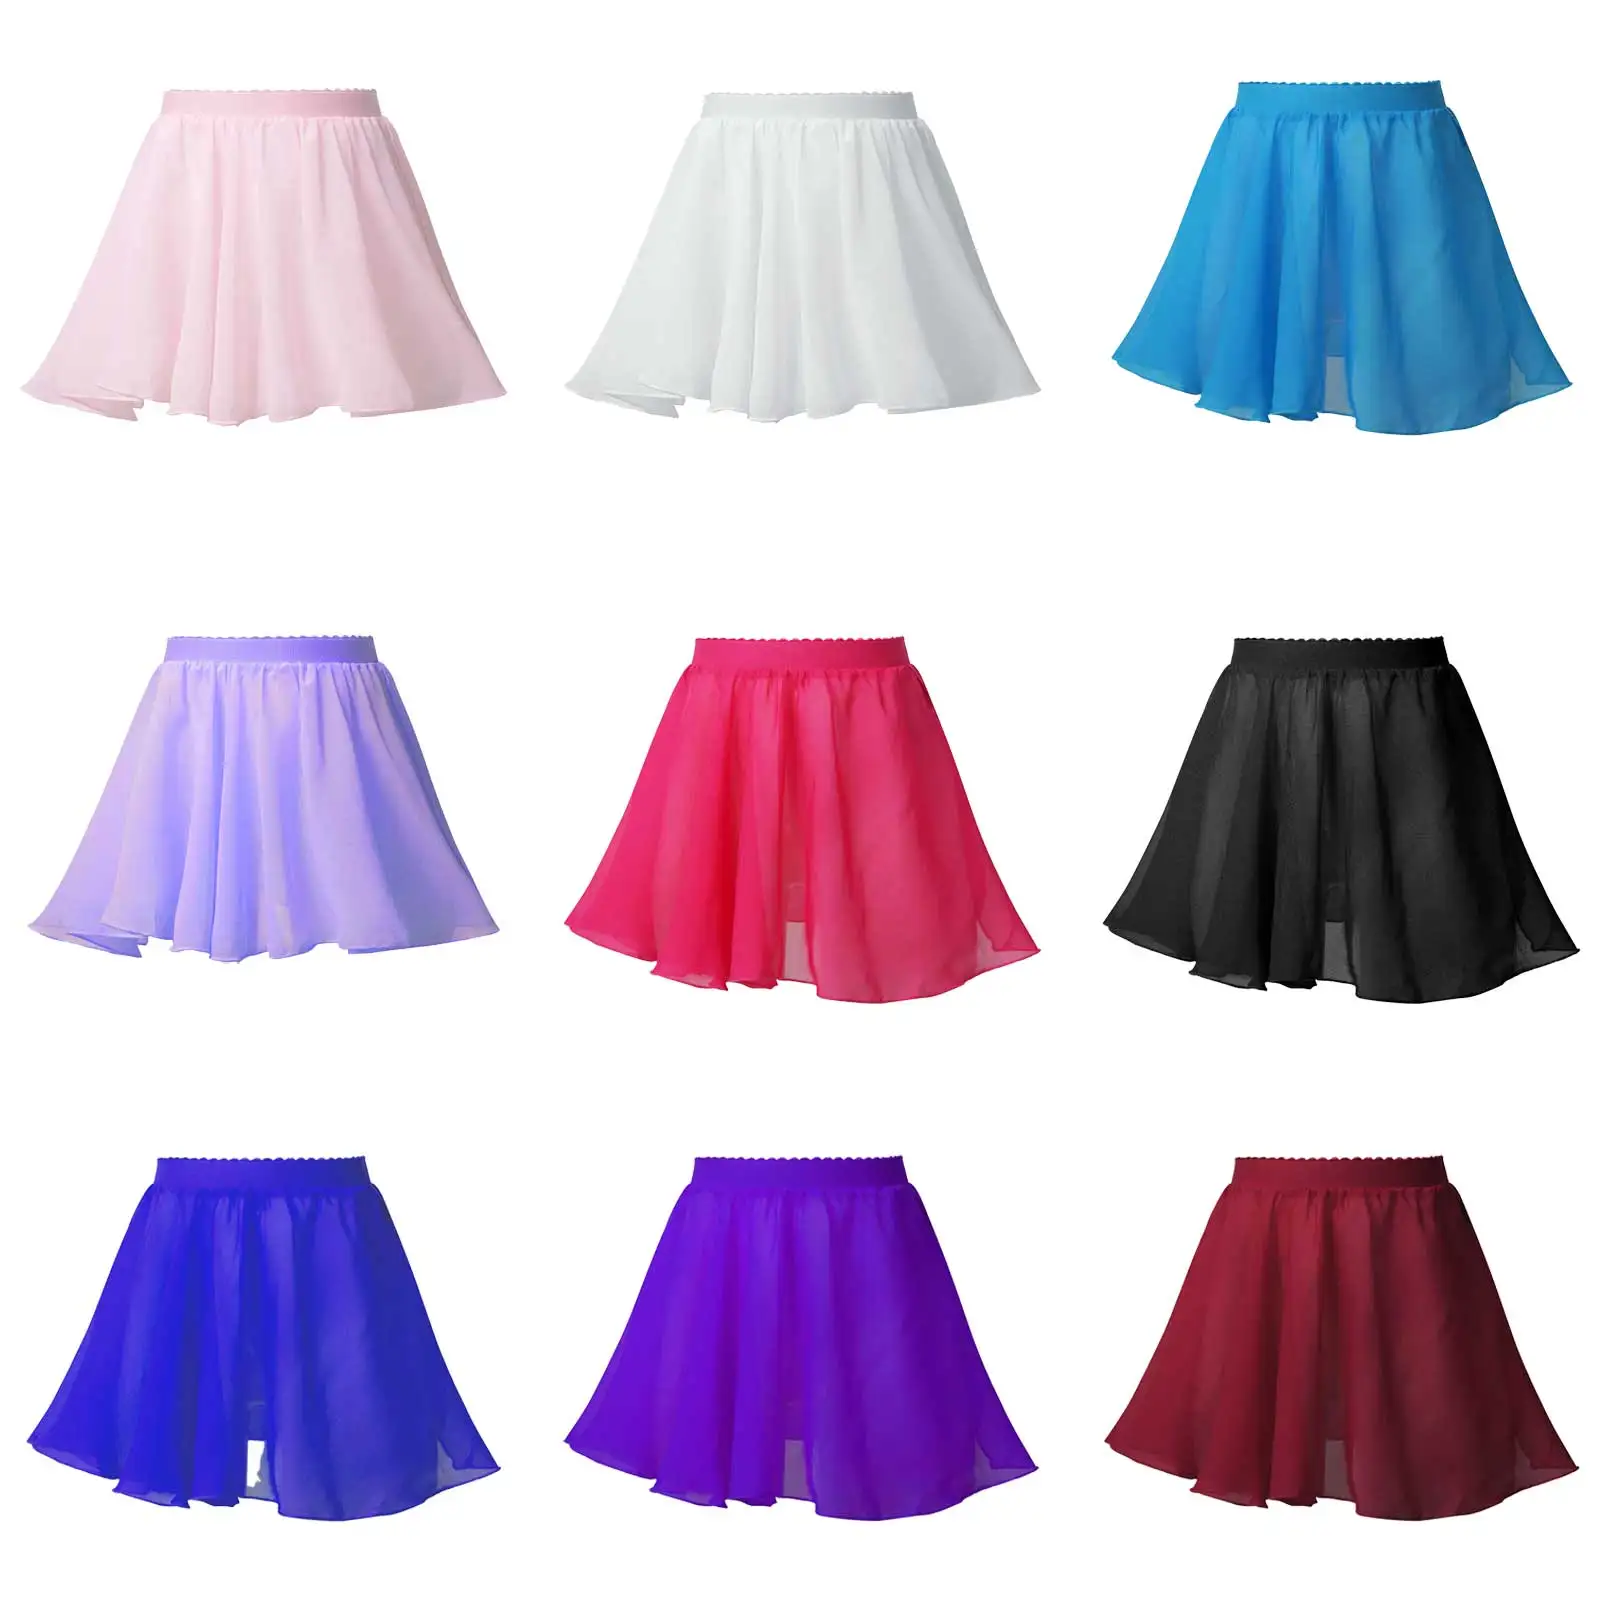 kids-girl-stylish-ballet-dancewear-skirts-elastic-waistband-solid-color-chiffon-veil-skirt-professional-ballerina-dance-costume